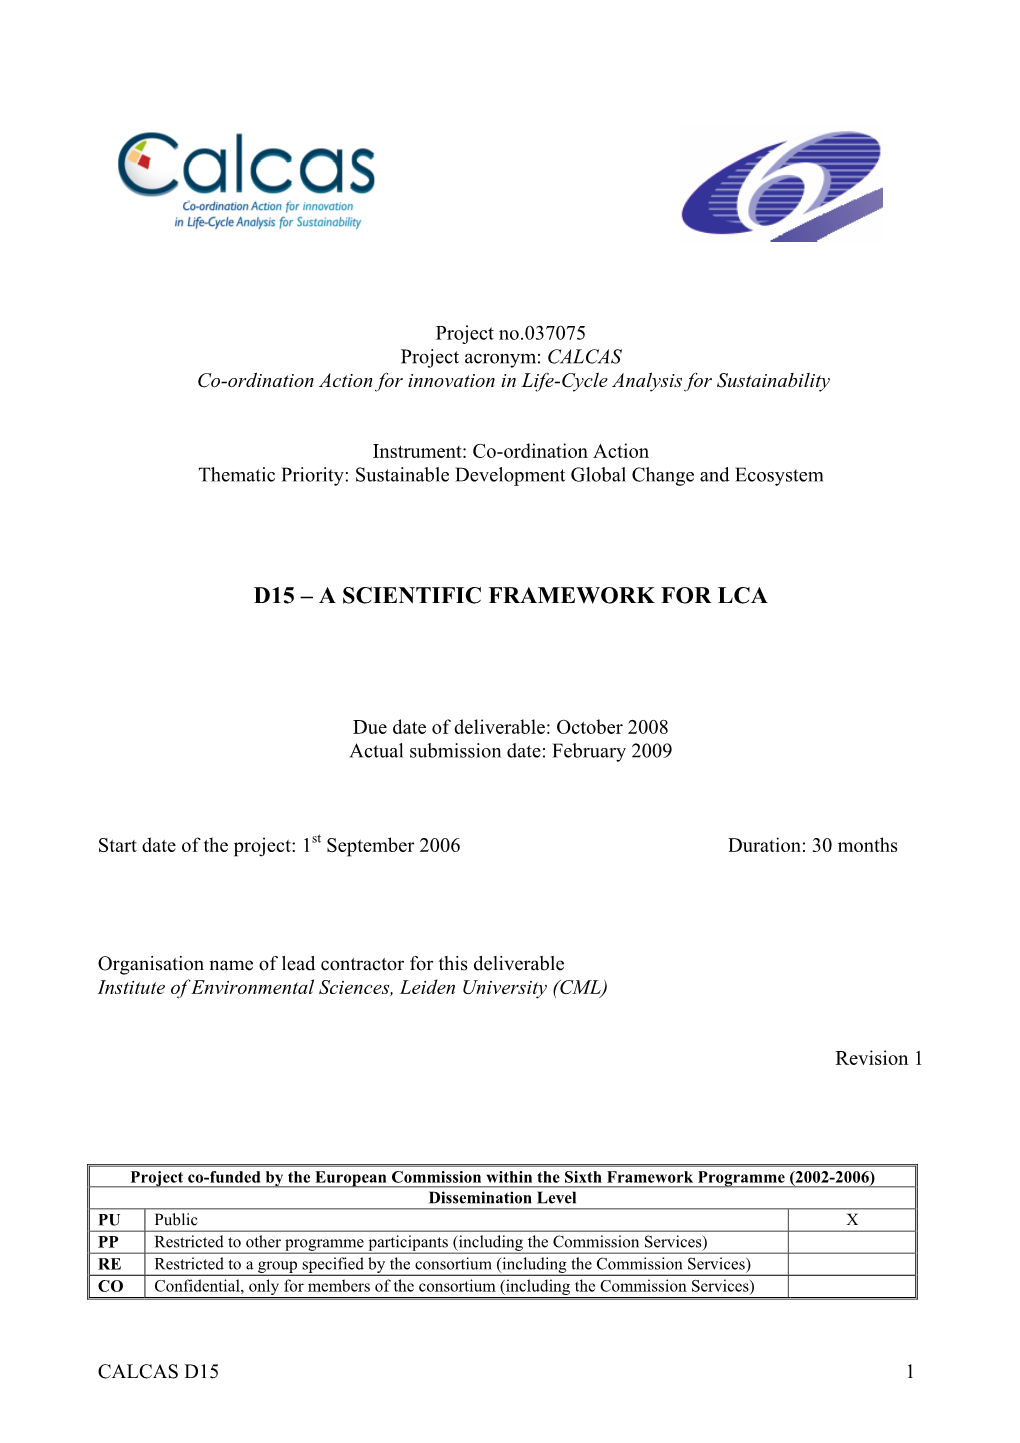 D15 – a Scientific Framework for Lca